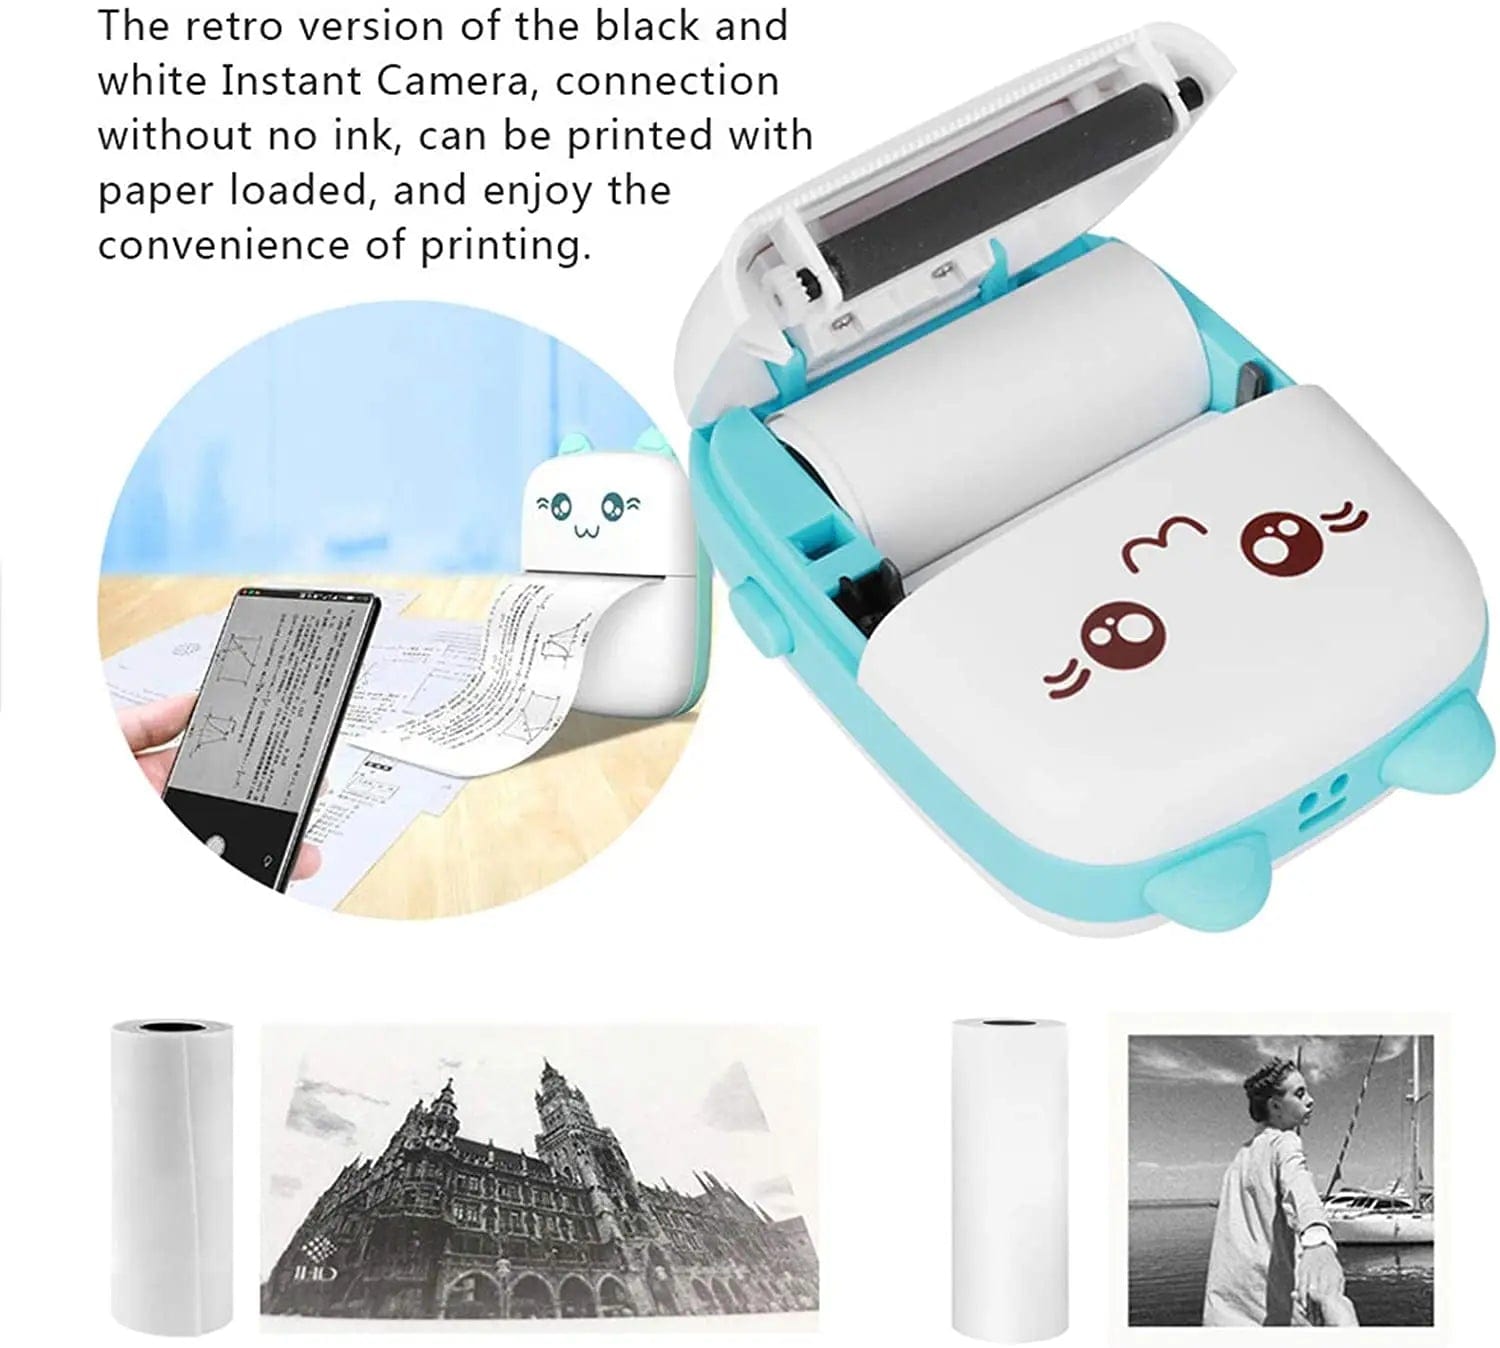 Cutie Portable Thermal Printer